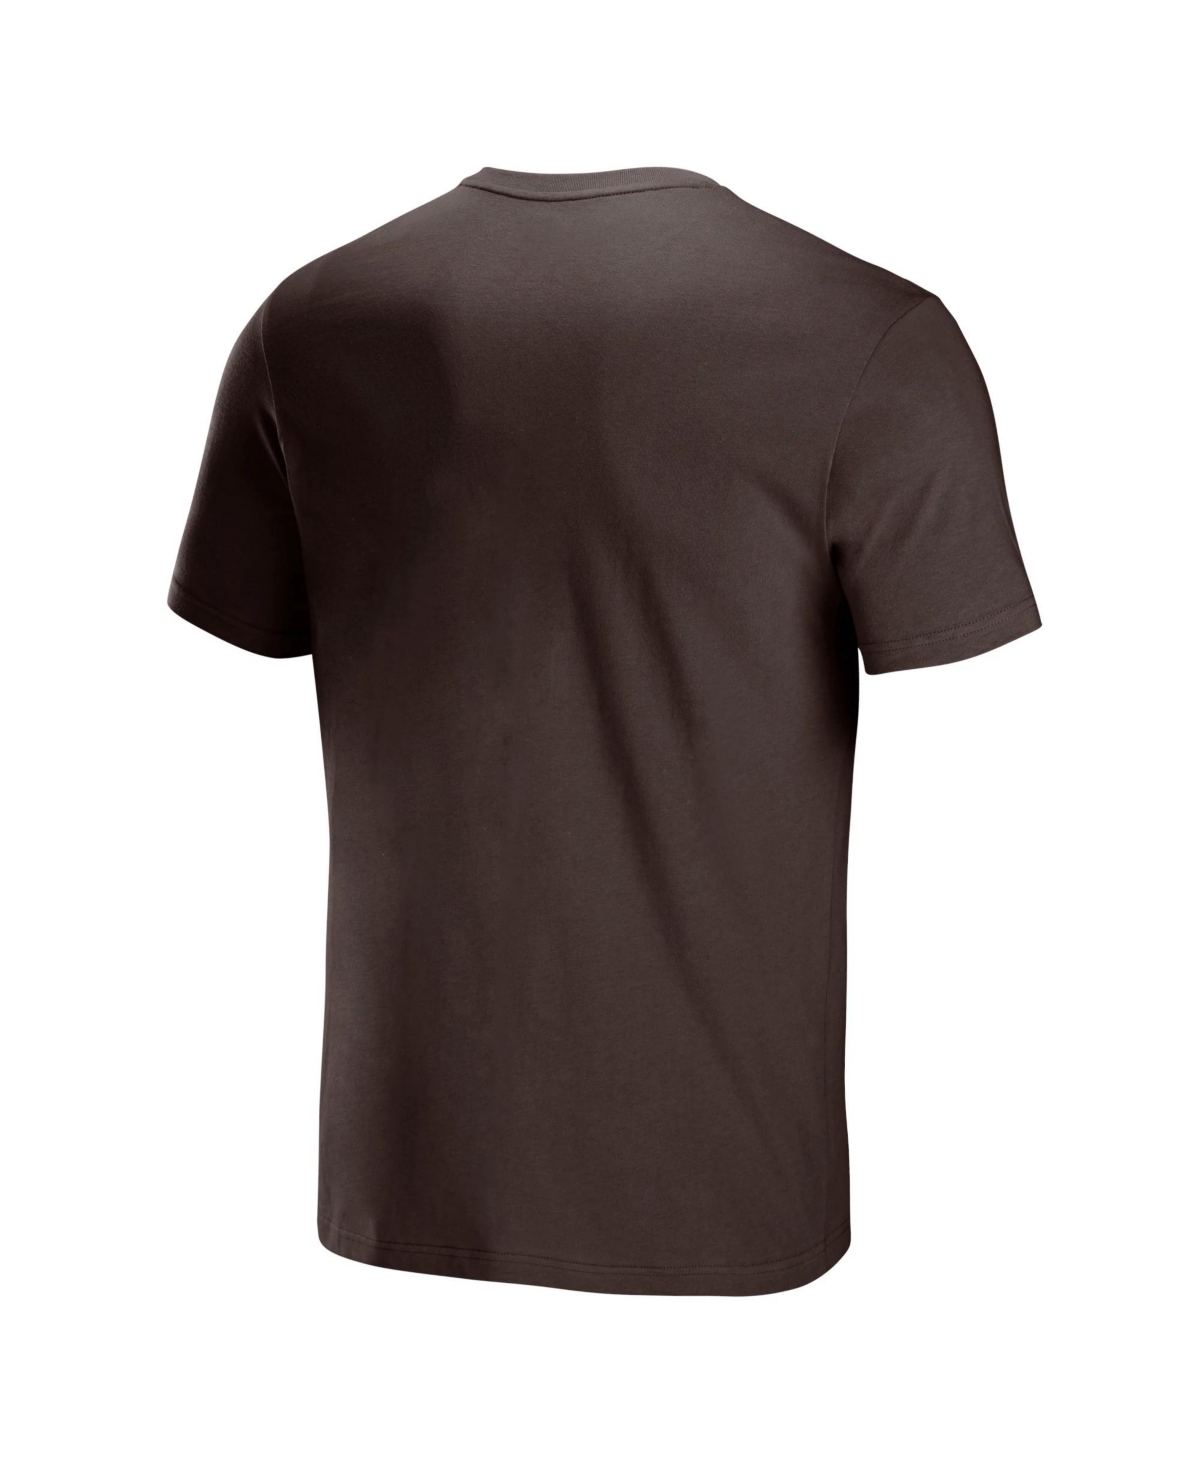 Shop Nfl Properties Men's Nfl X Staple Black Cleveland Browns Lockup Logo Short Sleeve T-shirt